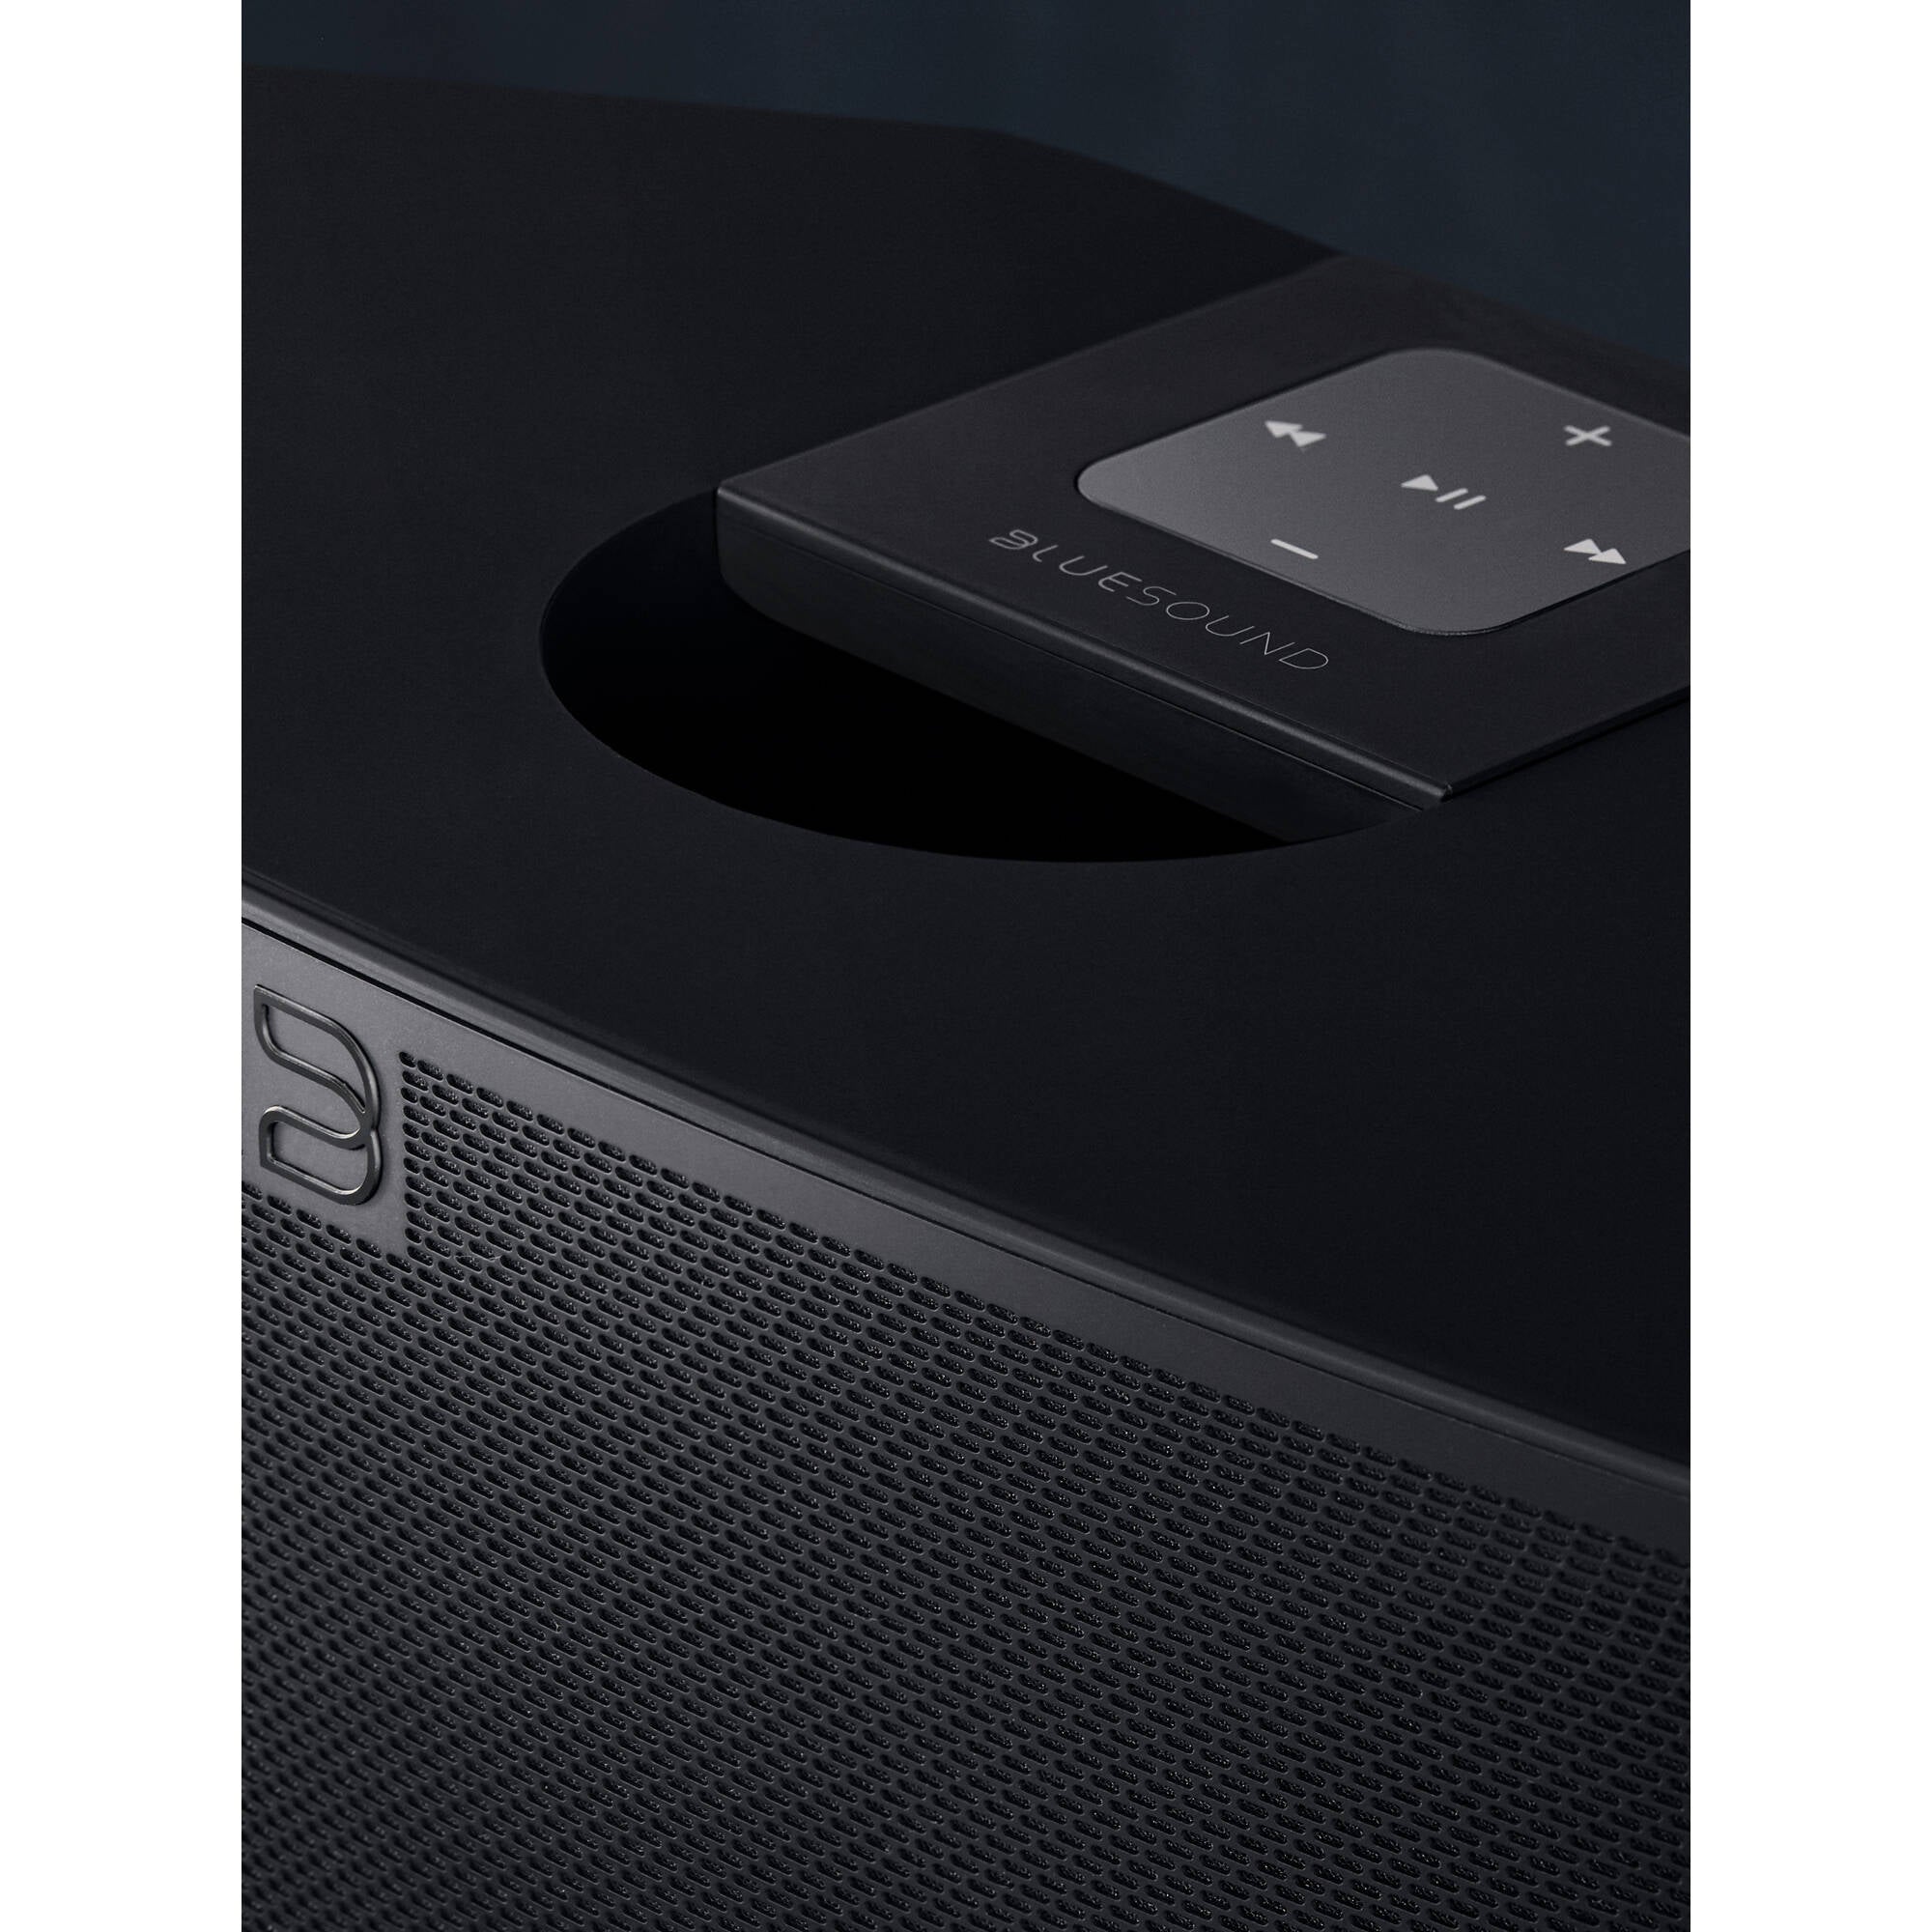 Bluesound PULSE 2i Wireless streaming speaker